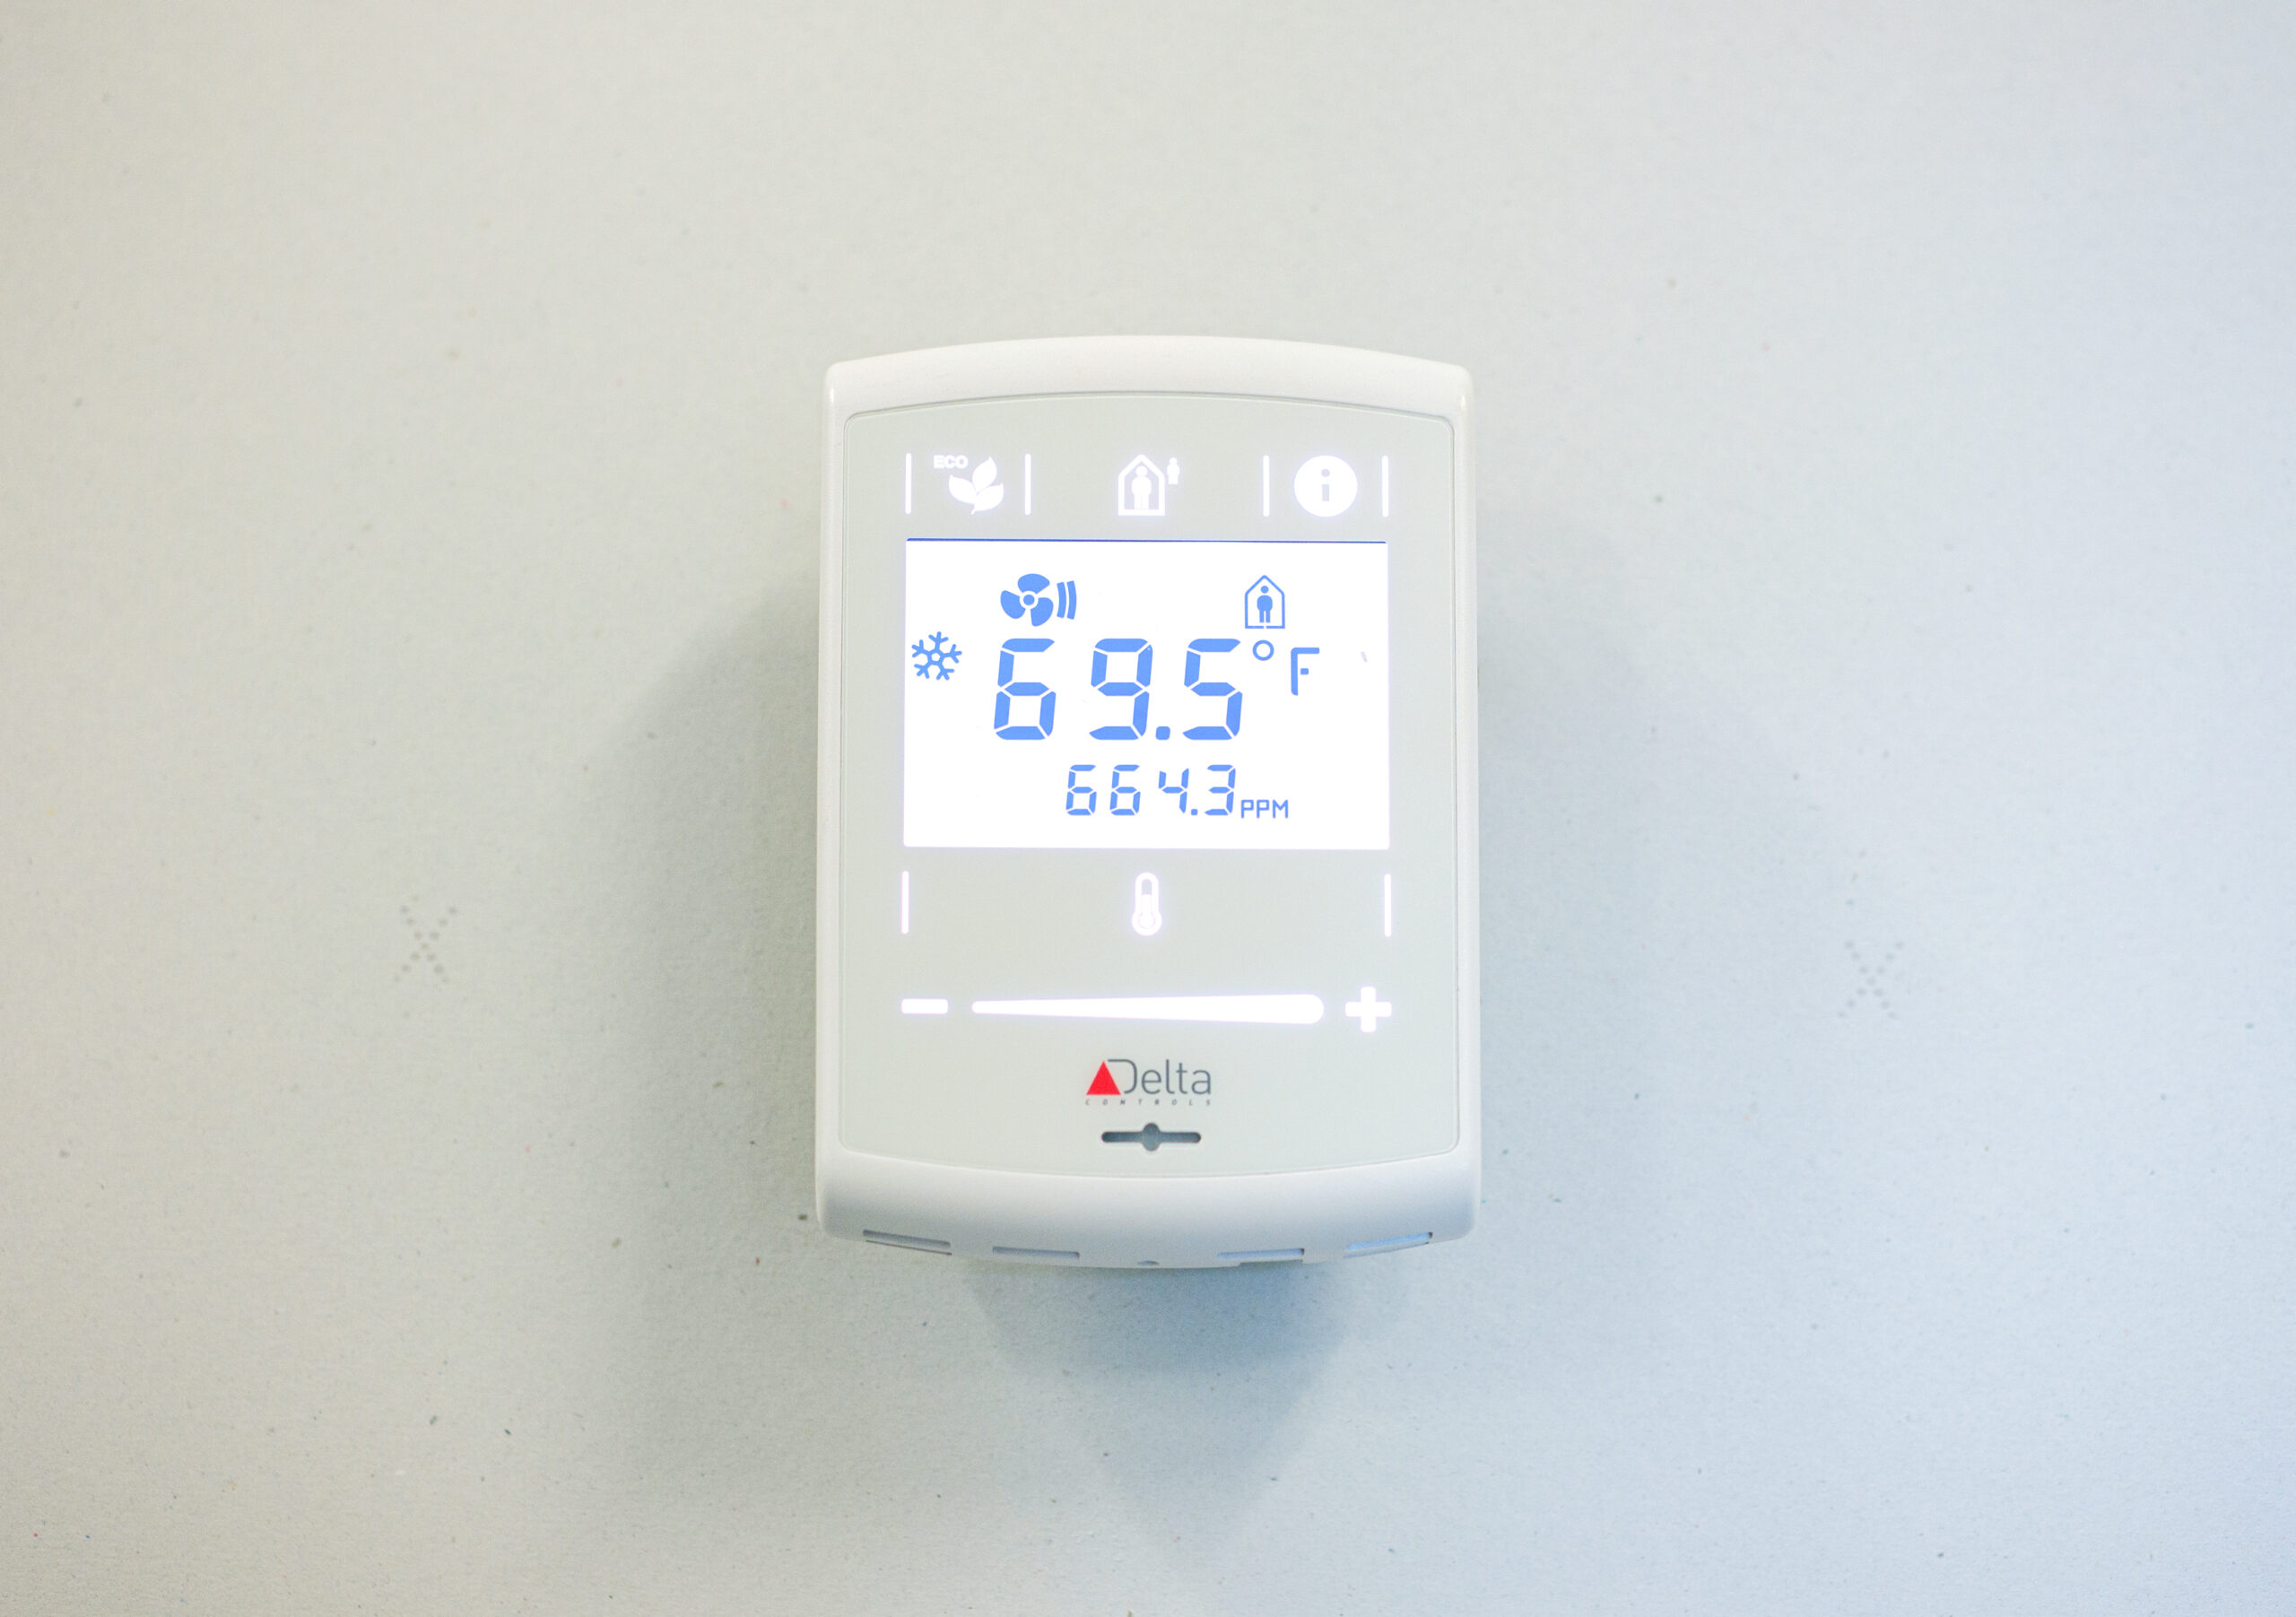 Deslta eZNT-T100 Series Carbon Dioxide (C02) Sensor Image